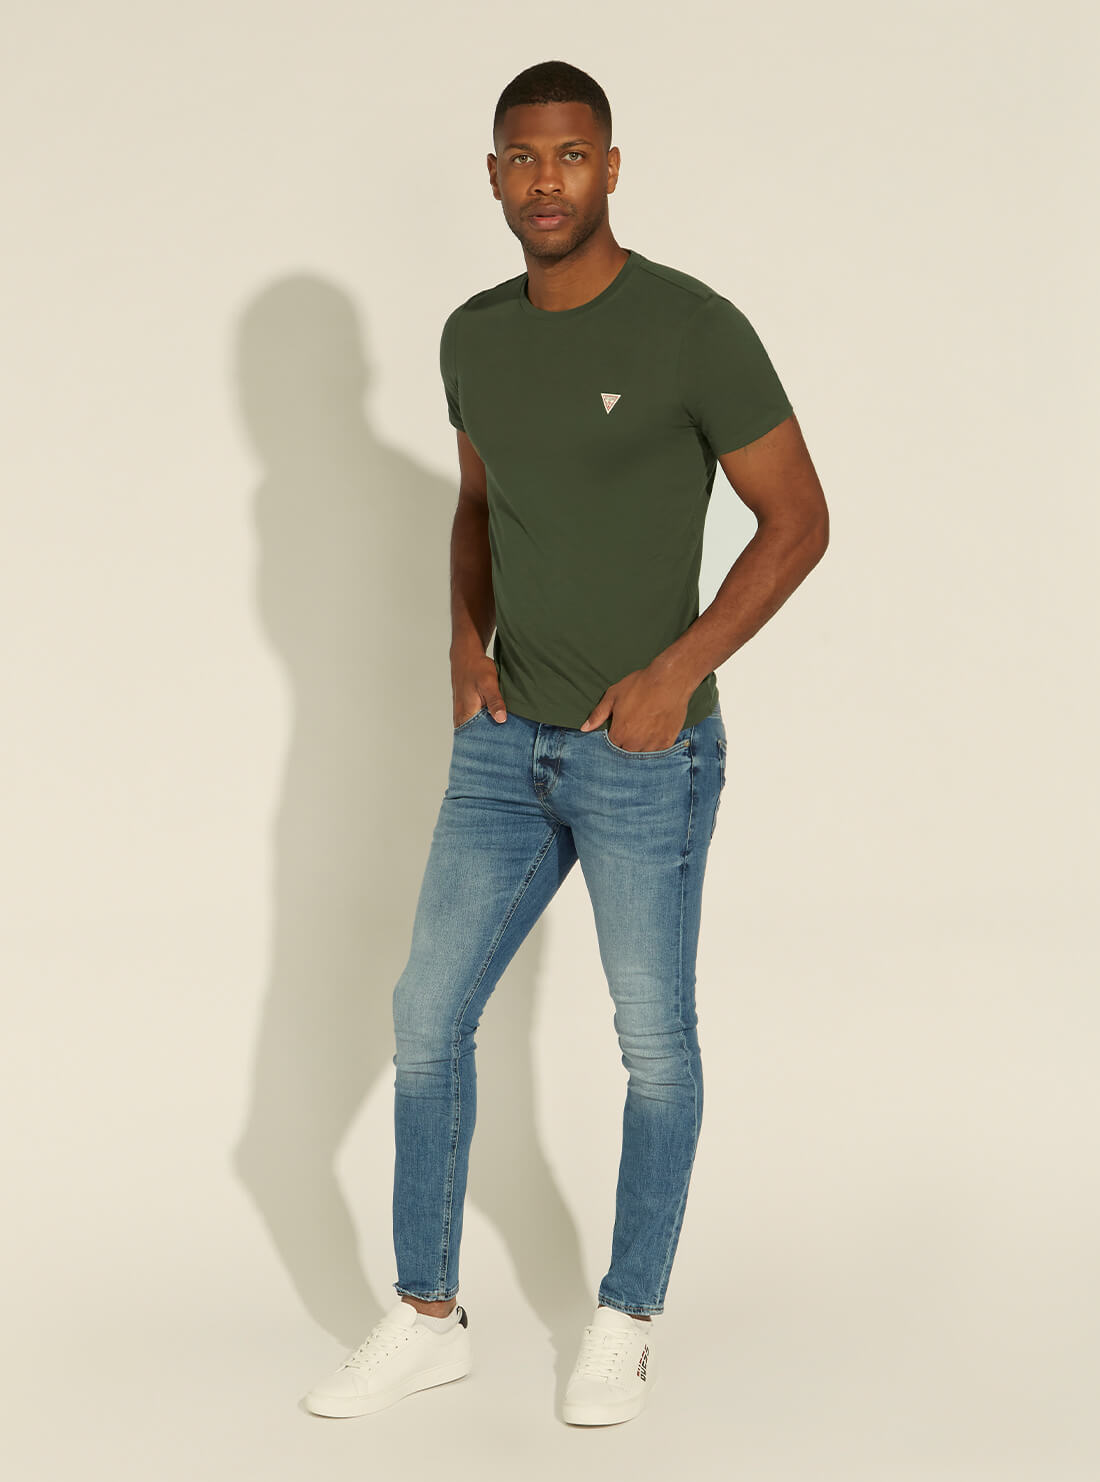 GUESS Mens Low-Rise Miami Skinny Denim Jeans in Carry Light Wash M1YAN1D4GV6 Full View